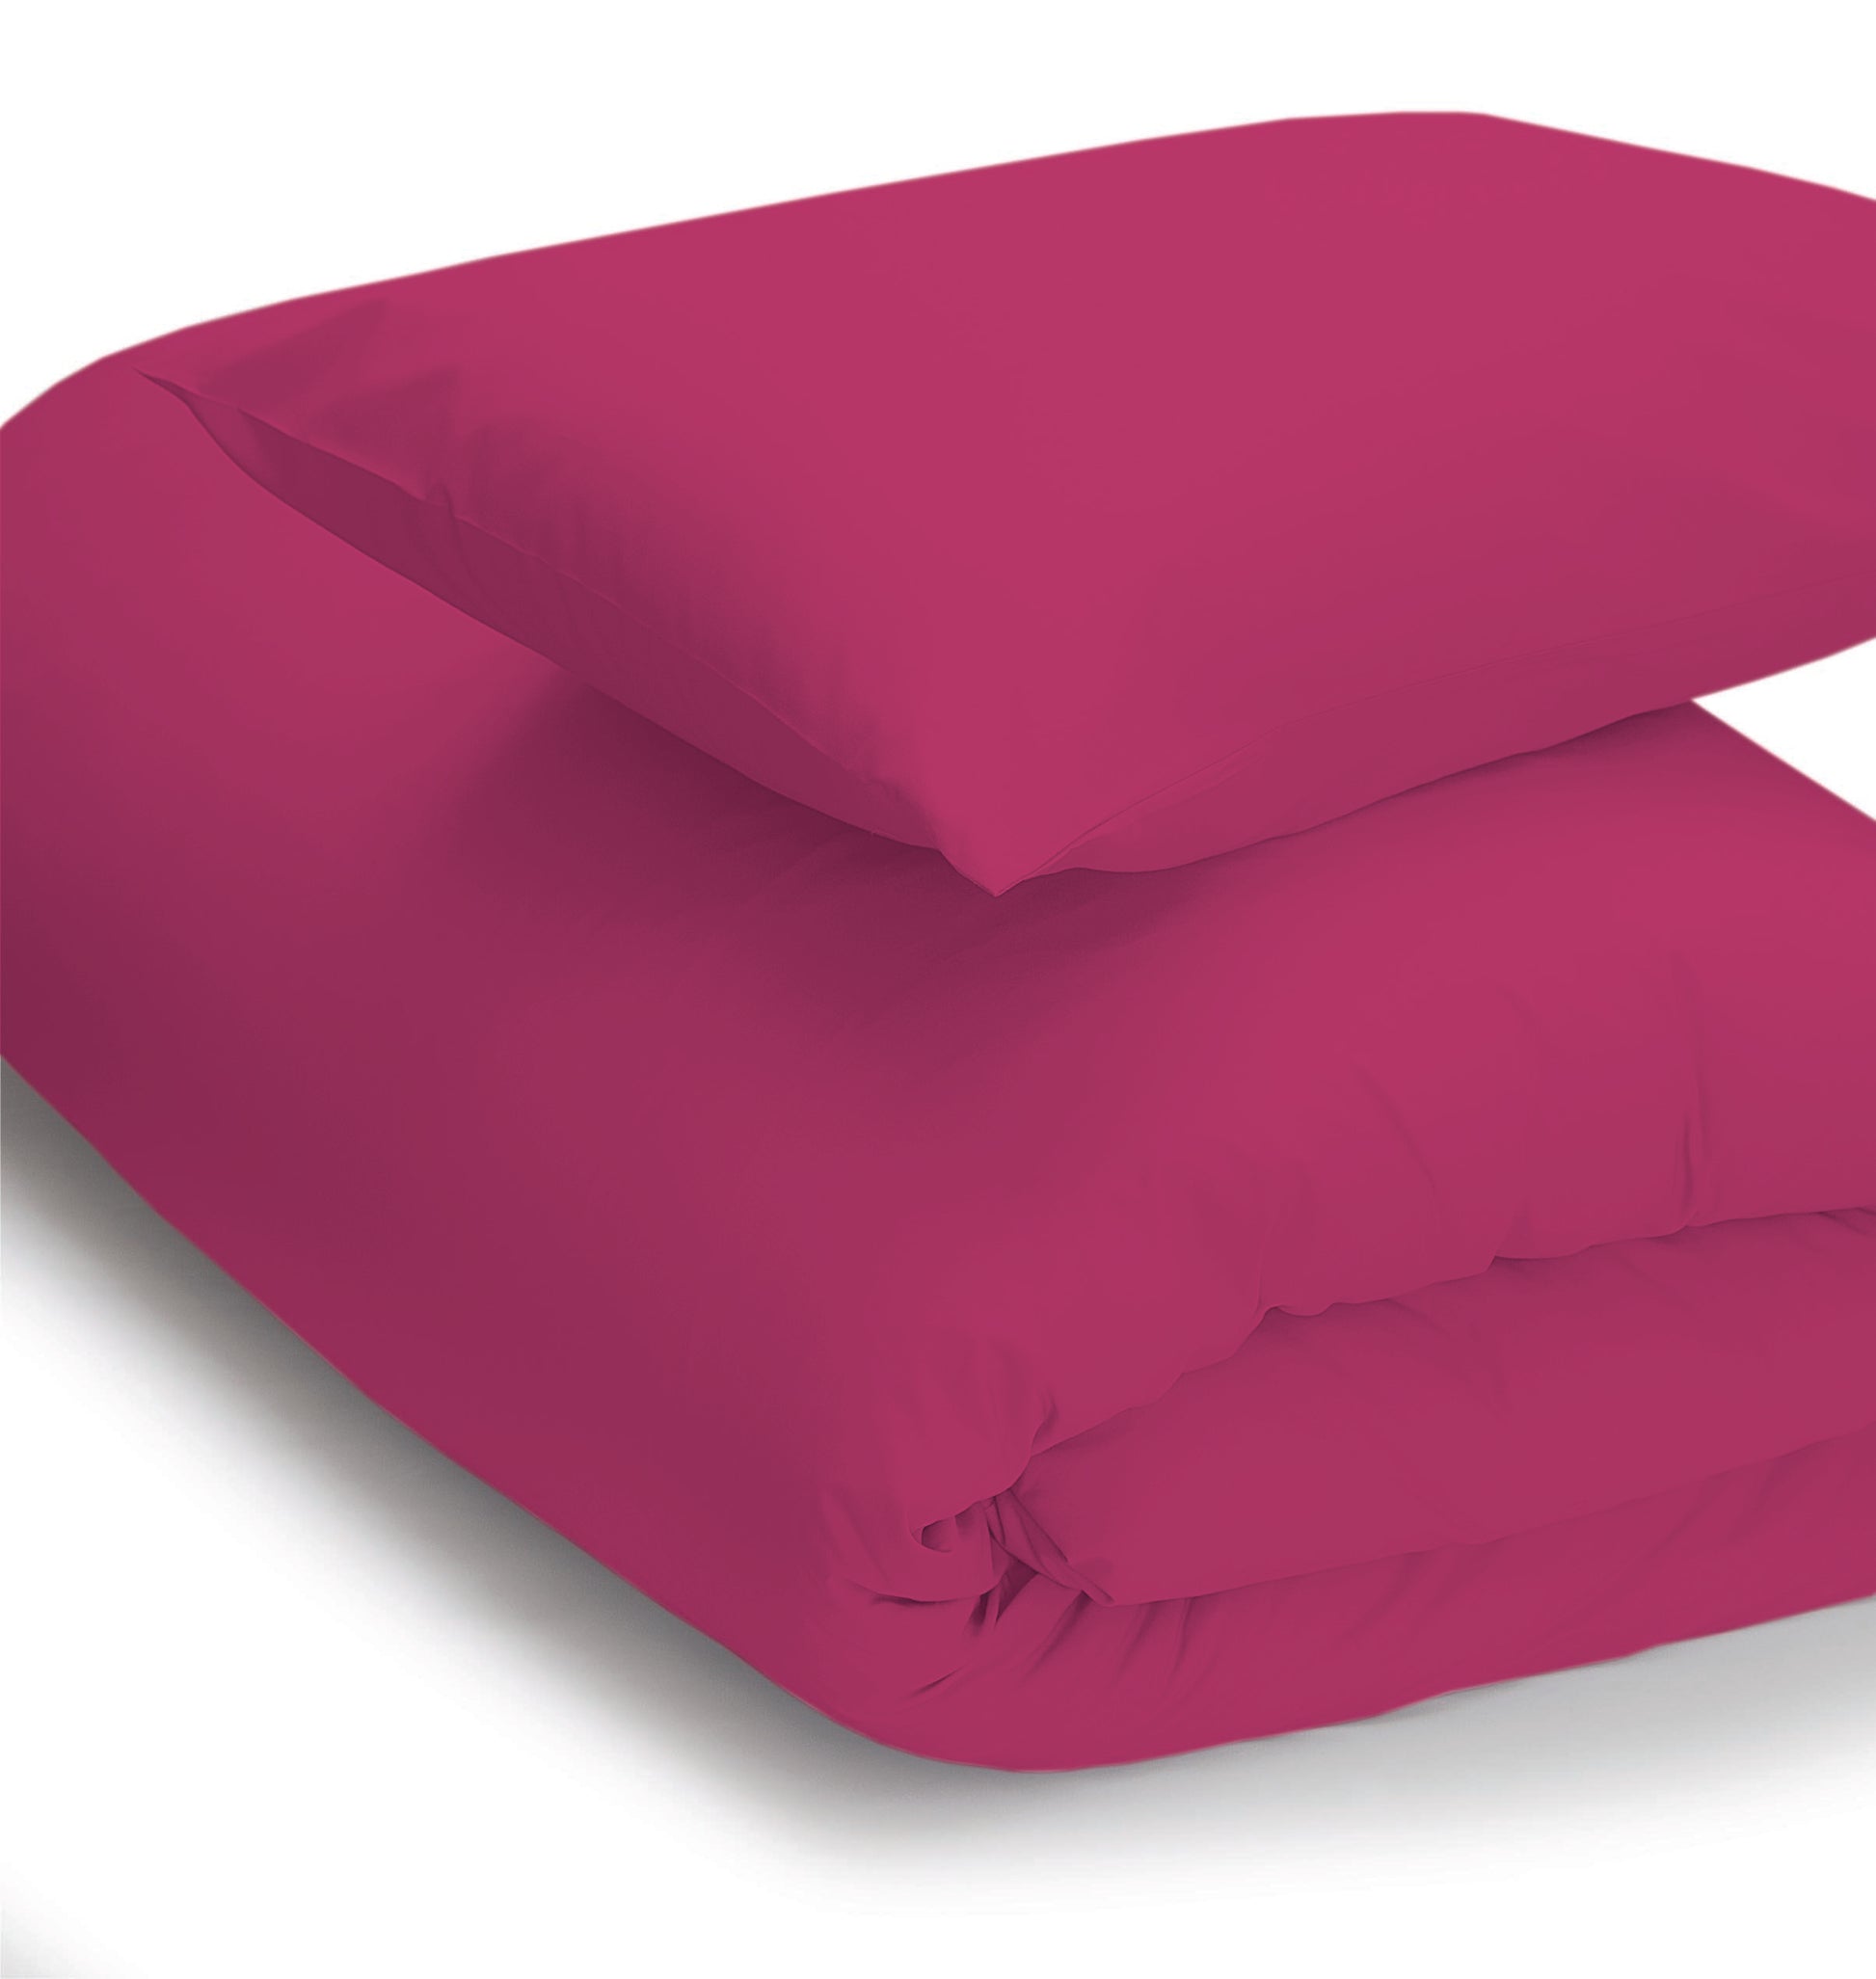 Fuschia colour bedding pack